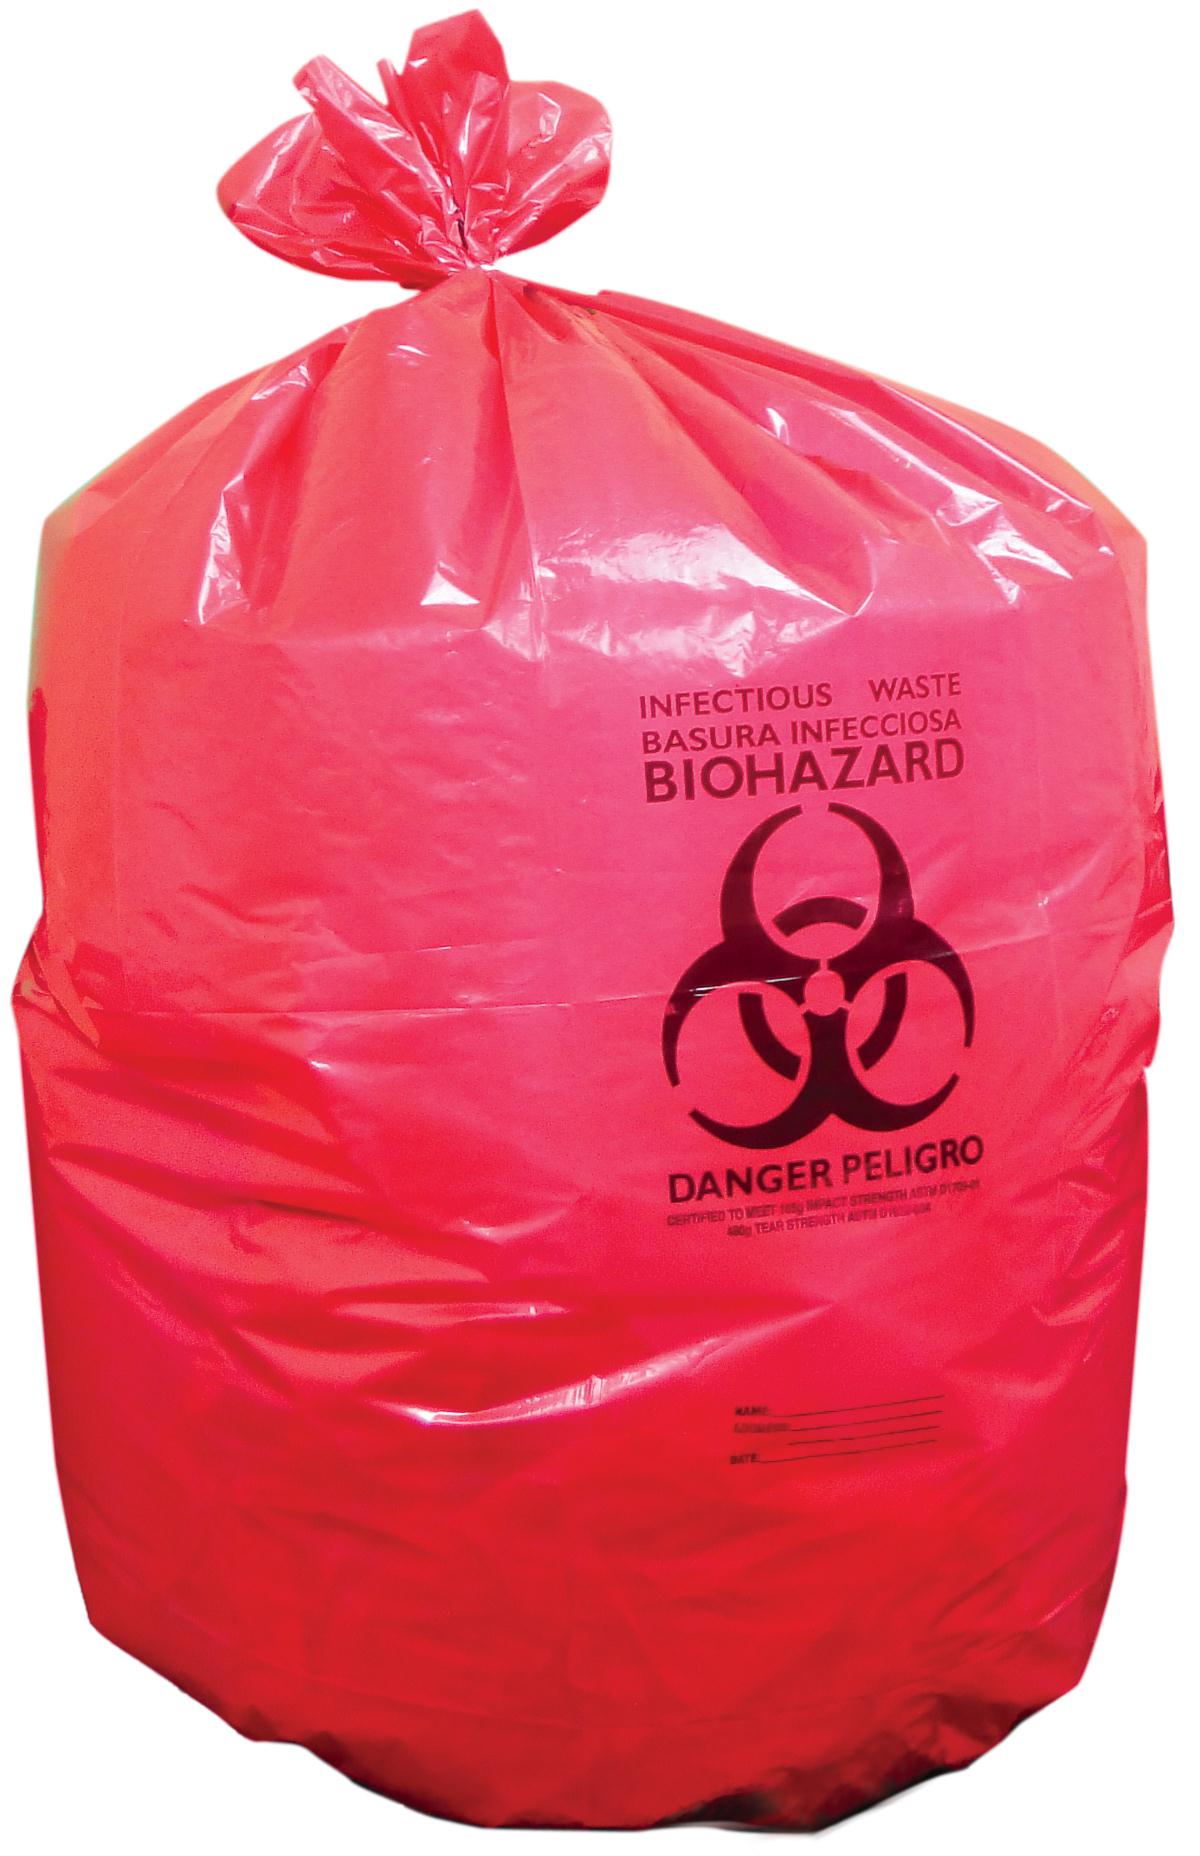  8-10 Gallon Medical Waste Trash Bags - 1.3 Mil - 500/case